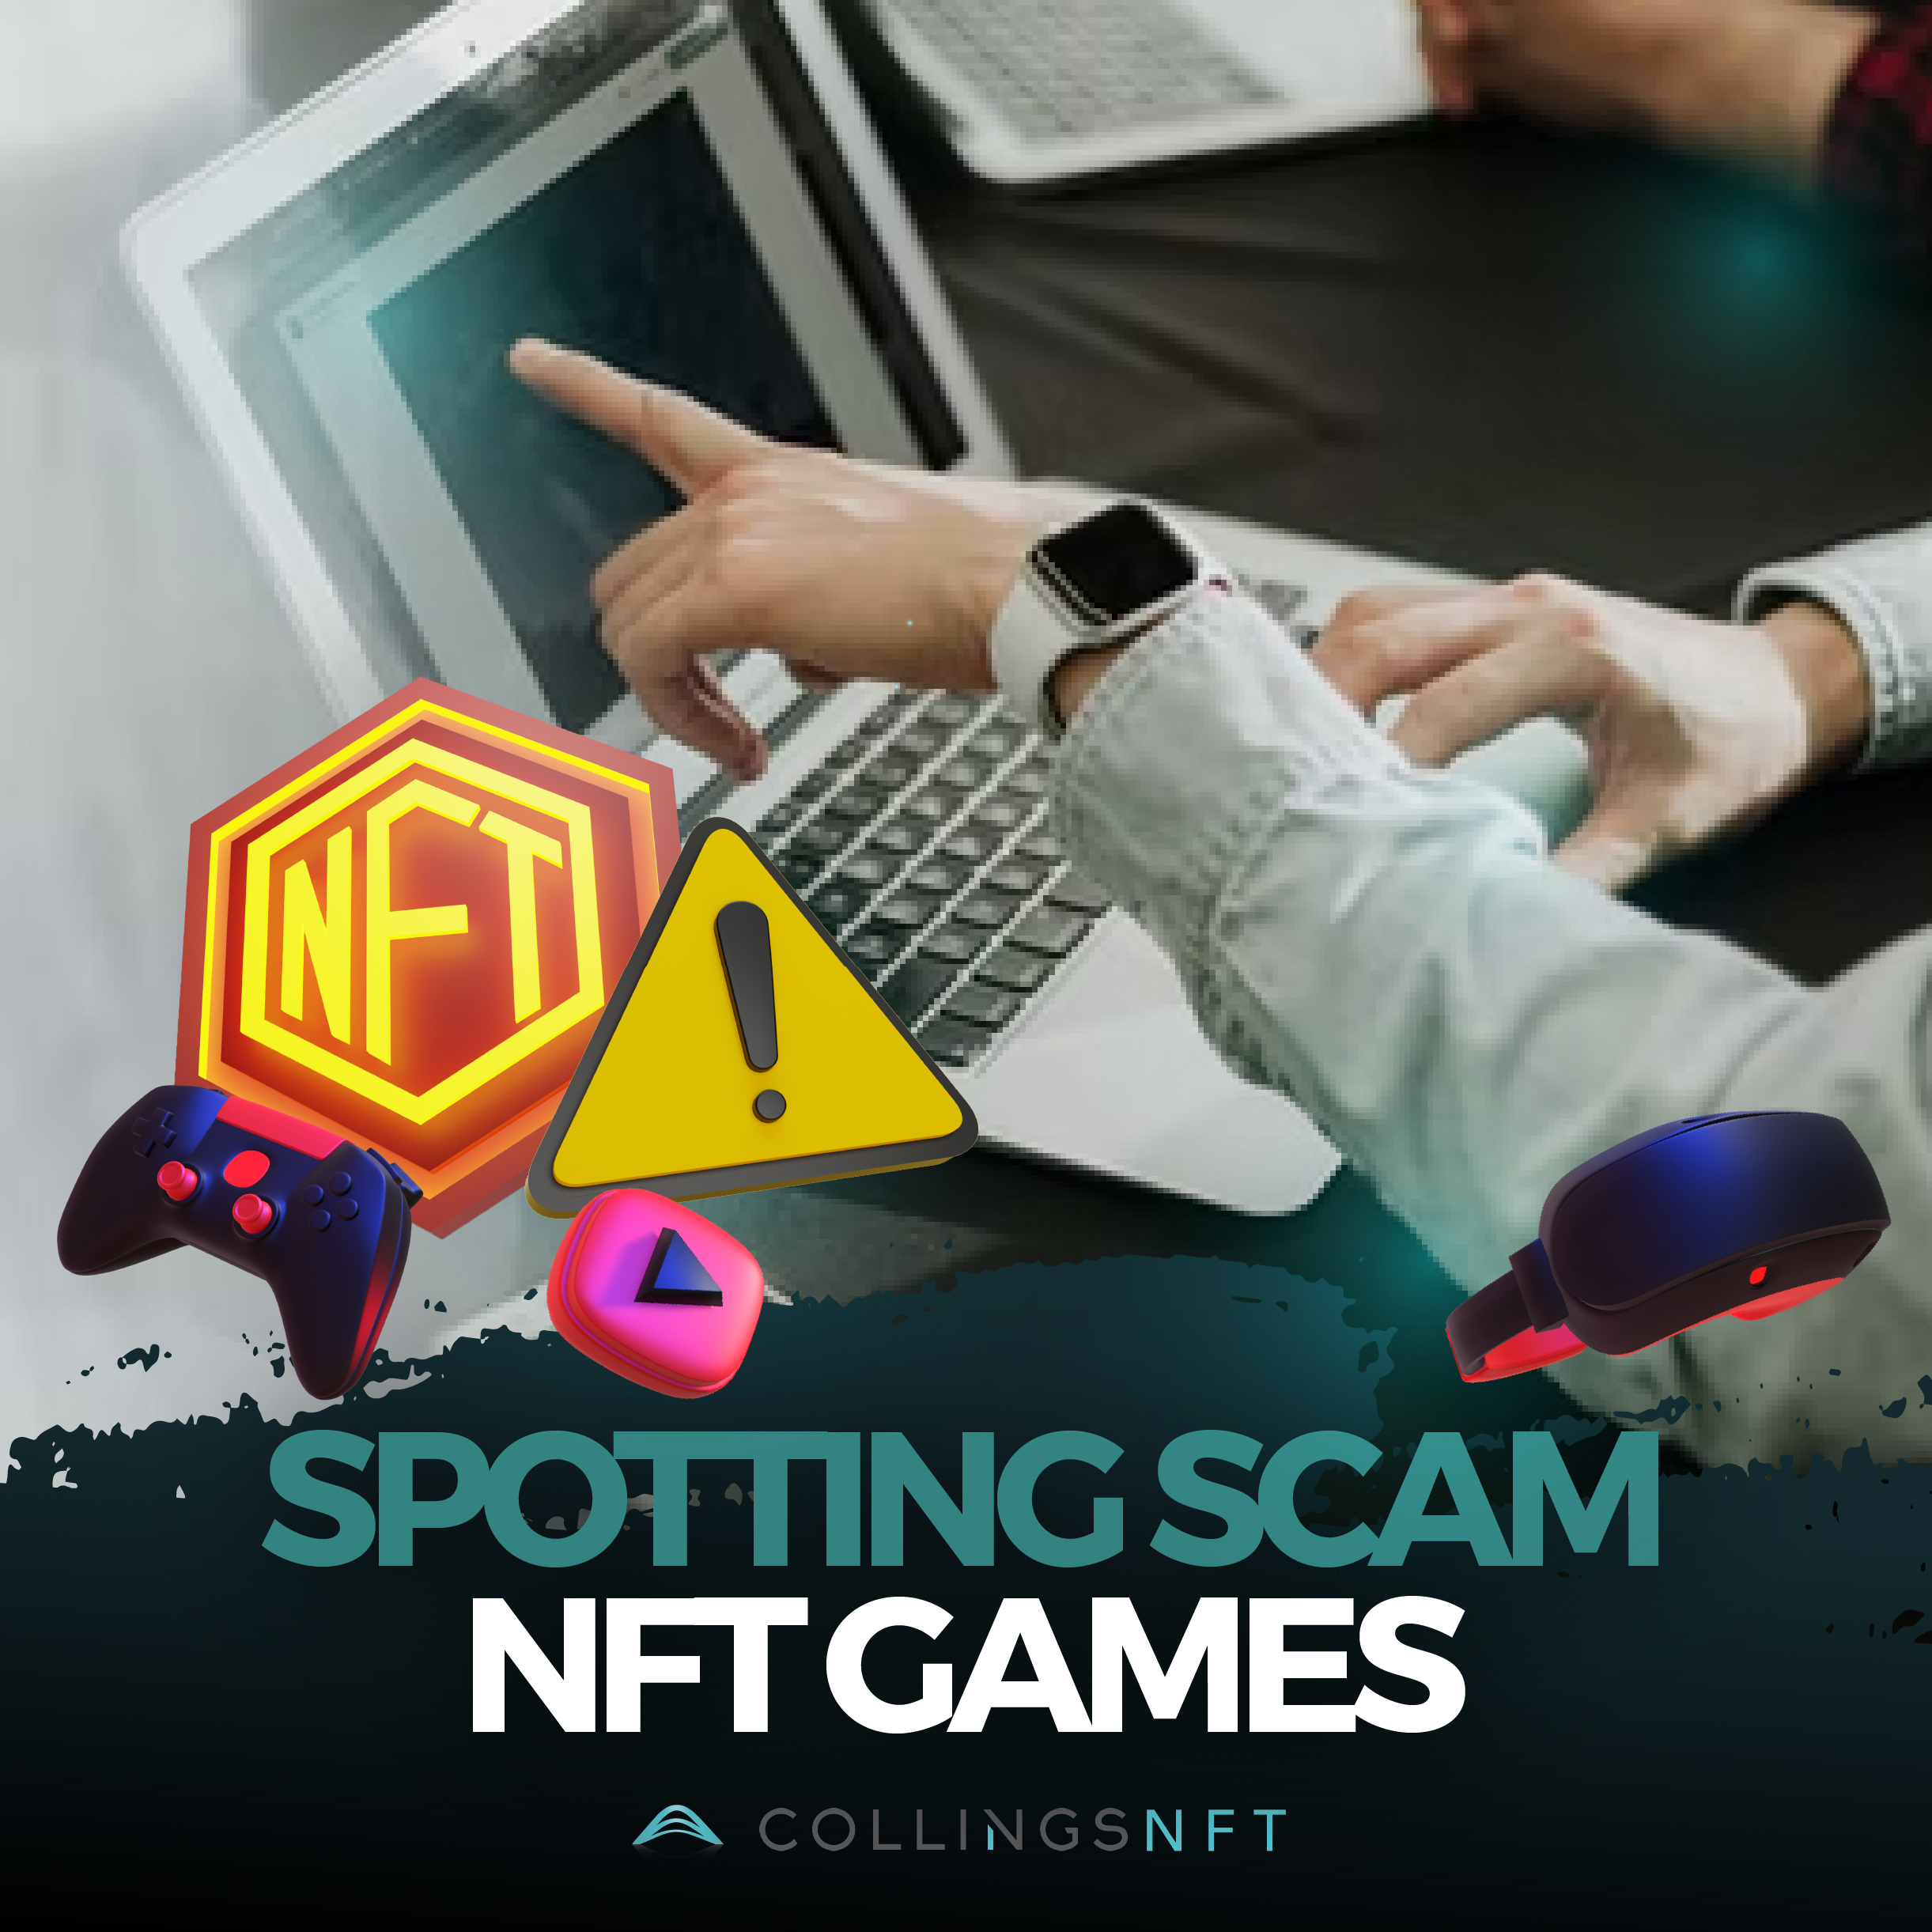 Spotting Scam NFT Games - Collings NFT